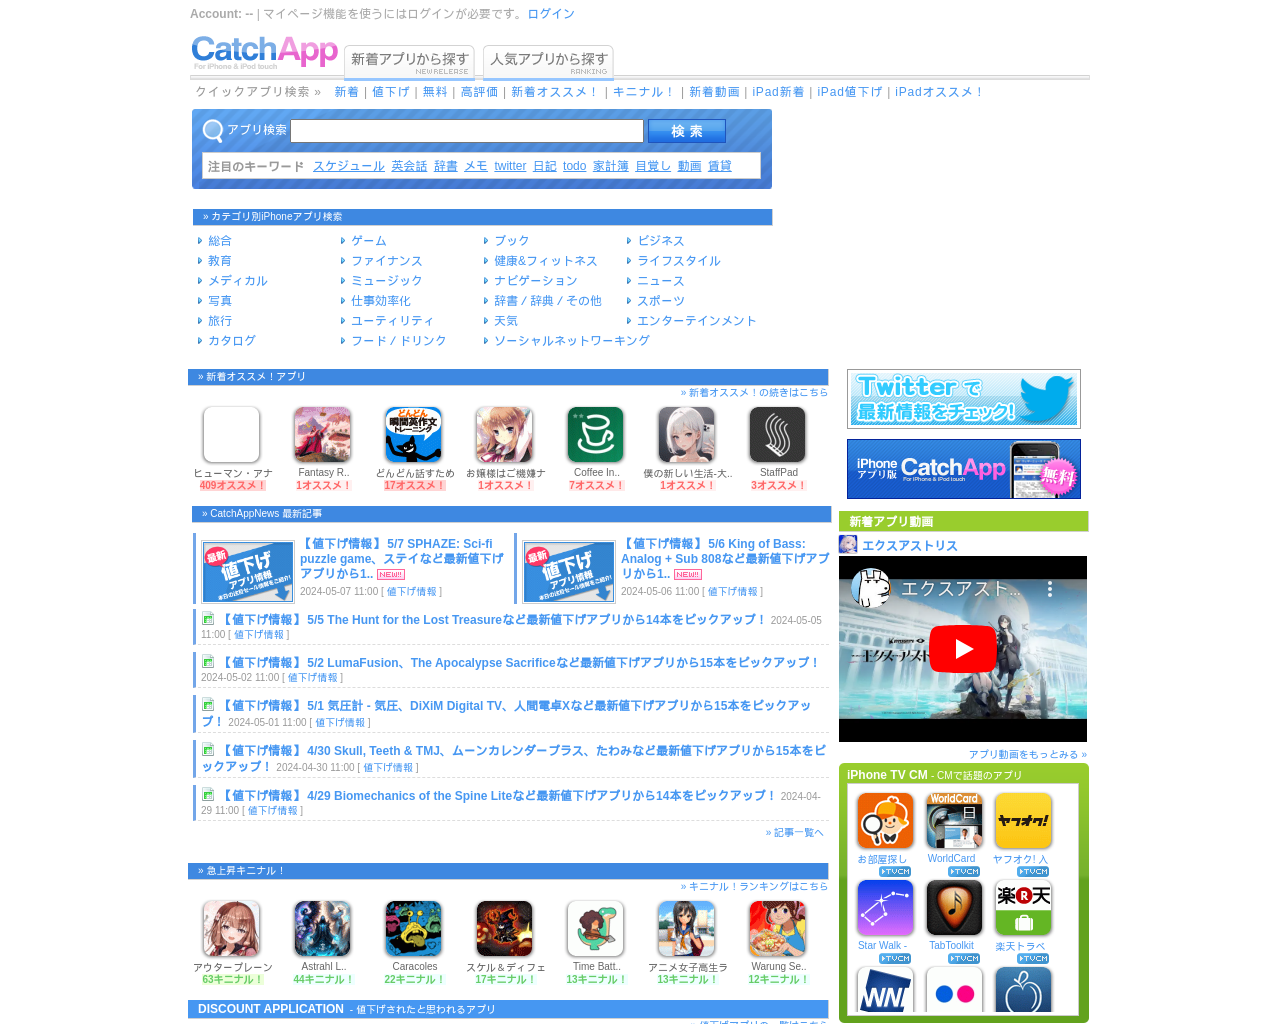 catchapp.net